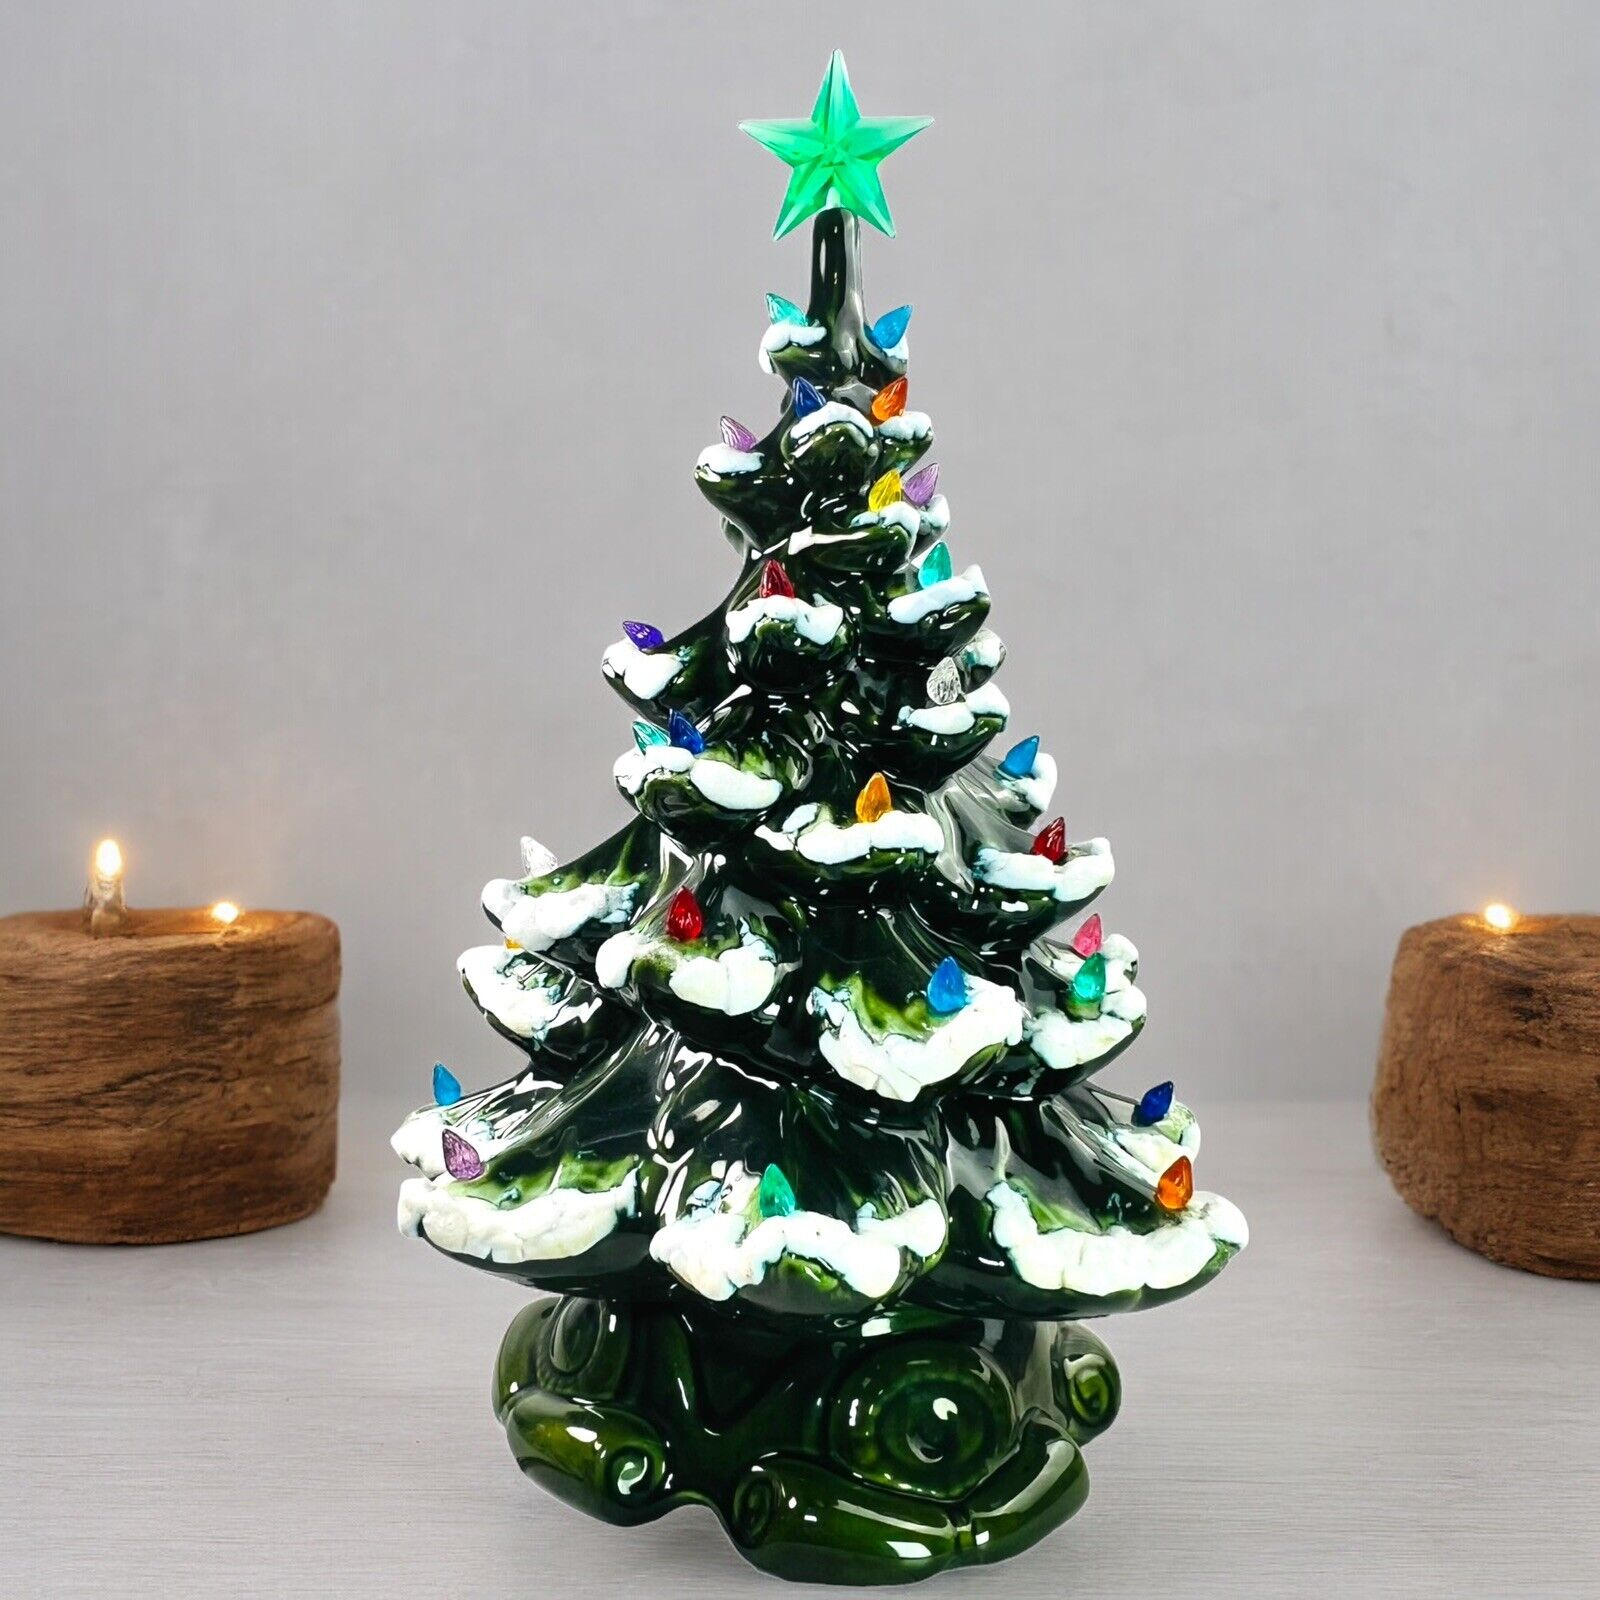 Vtg Ceramic Christmas Tree with Base 17” Tall Large Snow Flocked Light Up WORKS